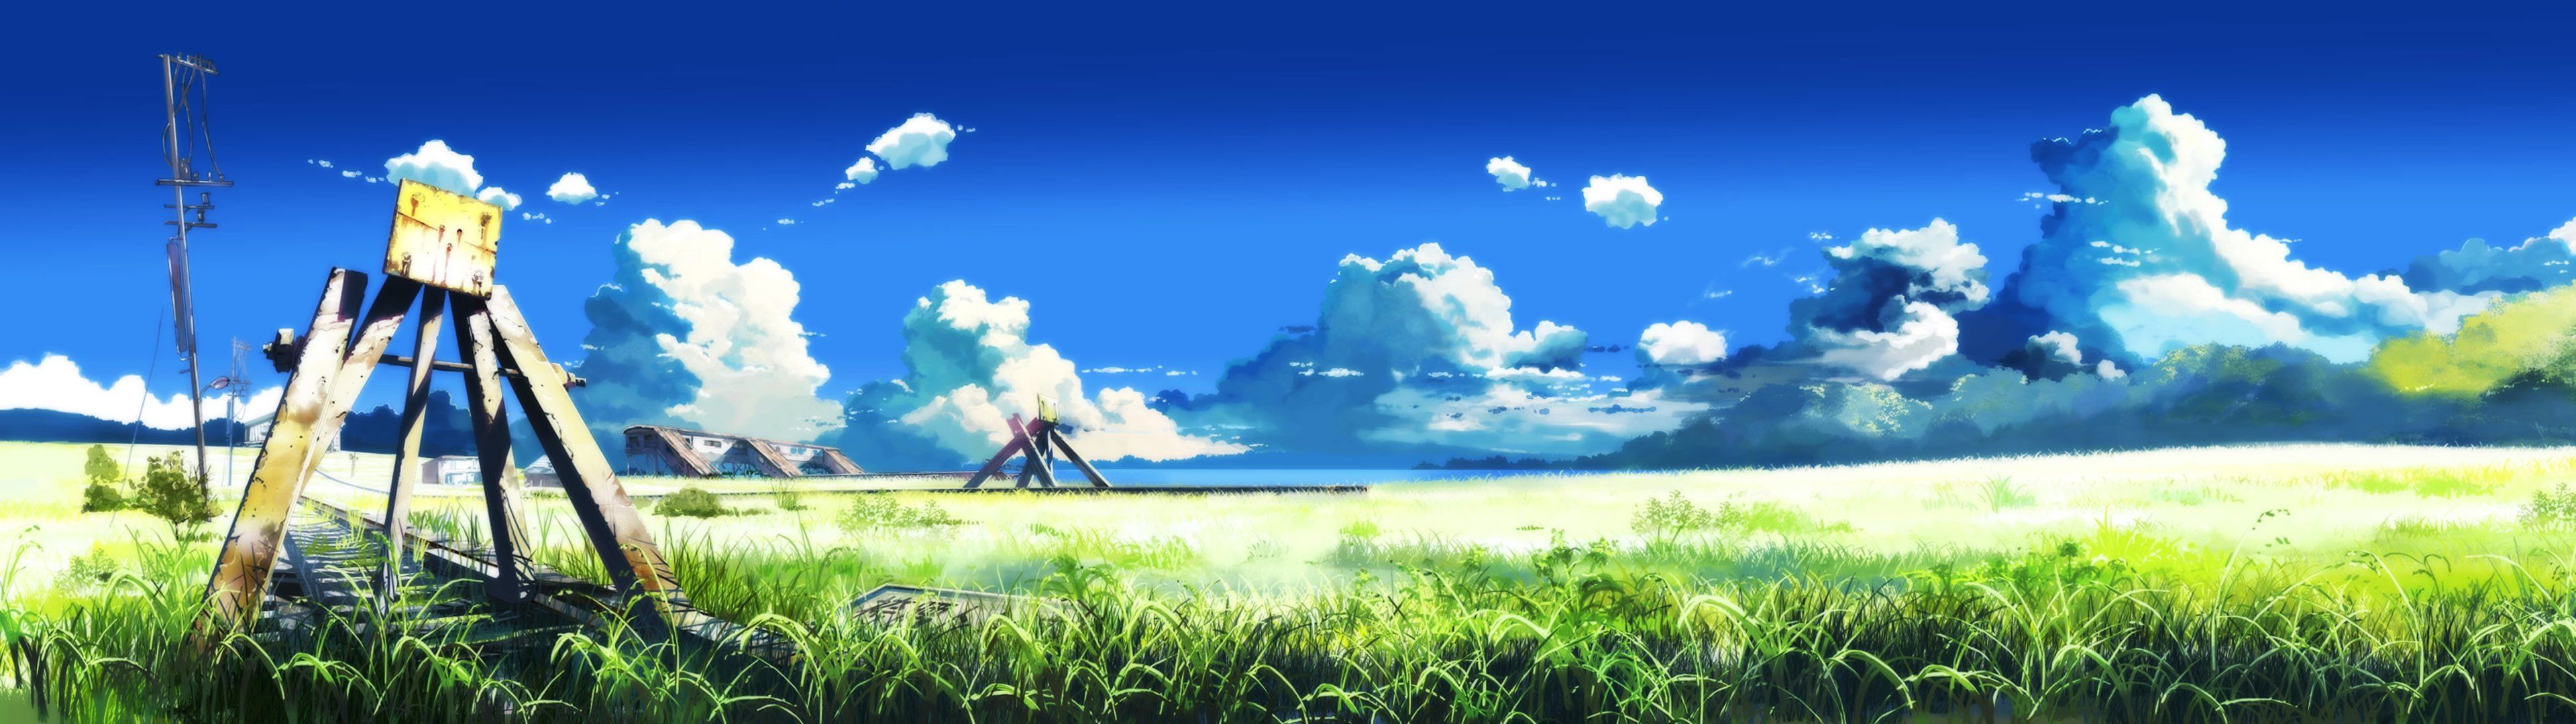 #owdlarrd #panoramic K #wallpaper #hdwallpaper #desktop. Anime wallpaper, Best background image, Panoramic